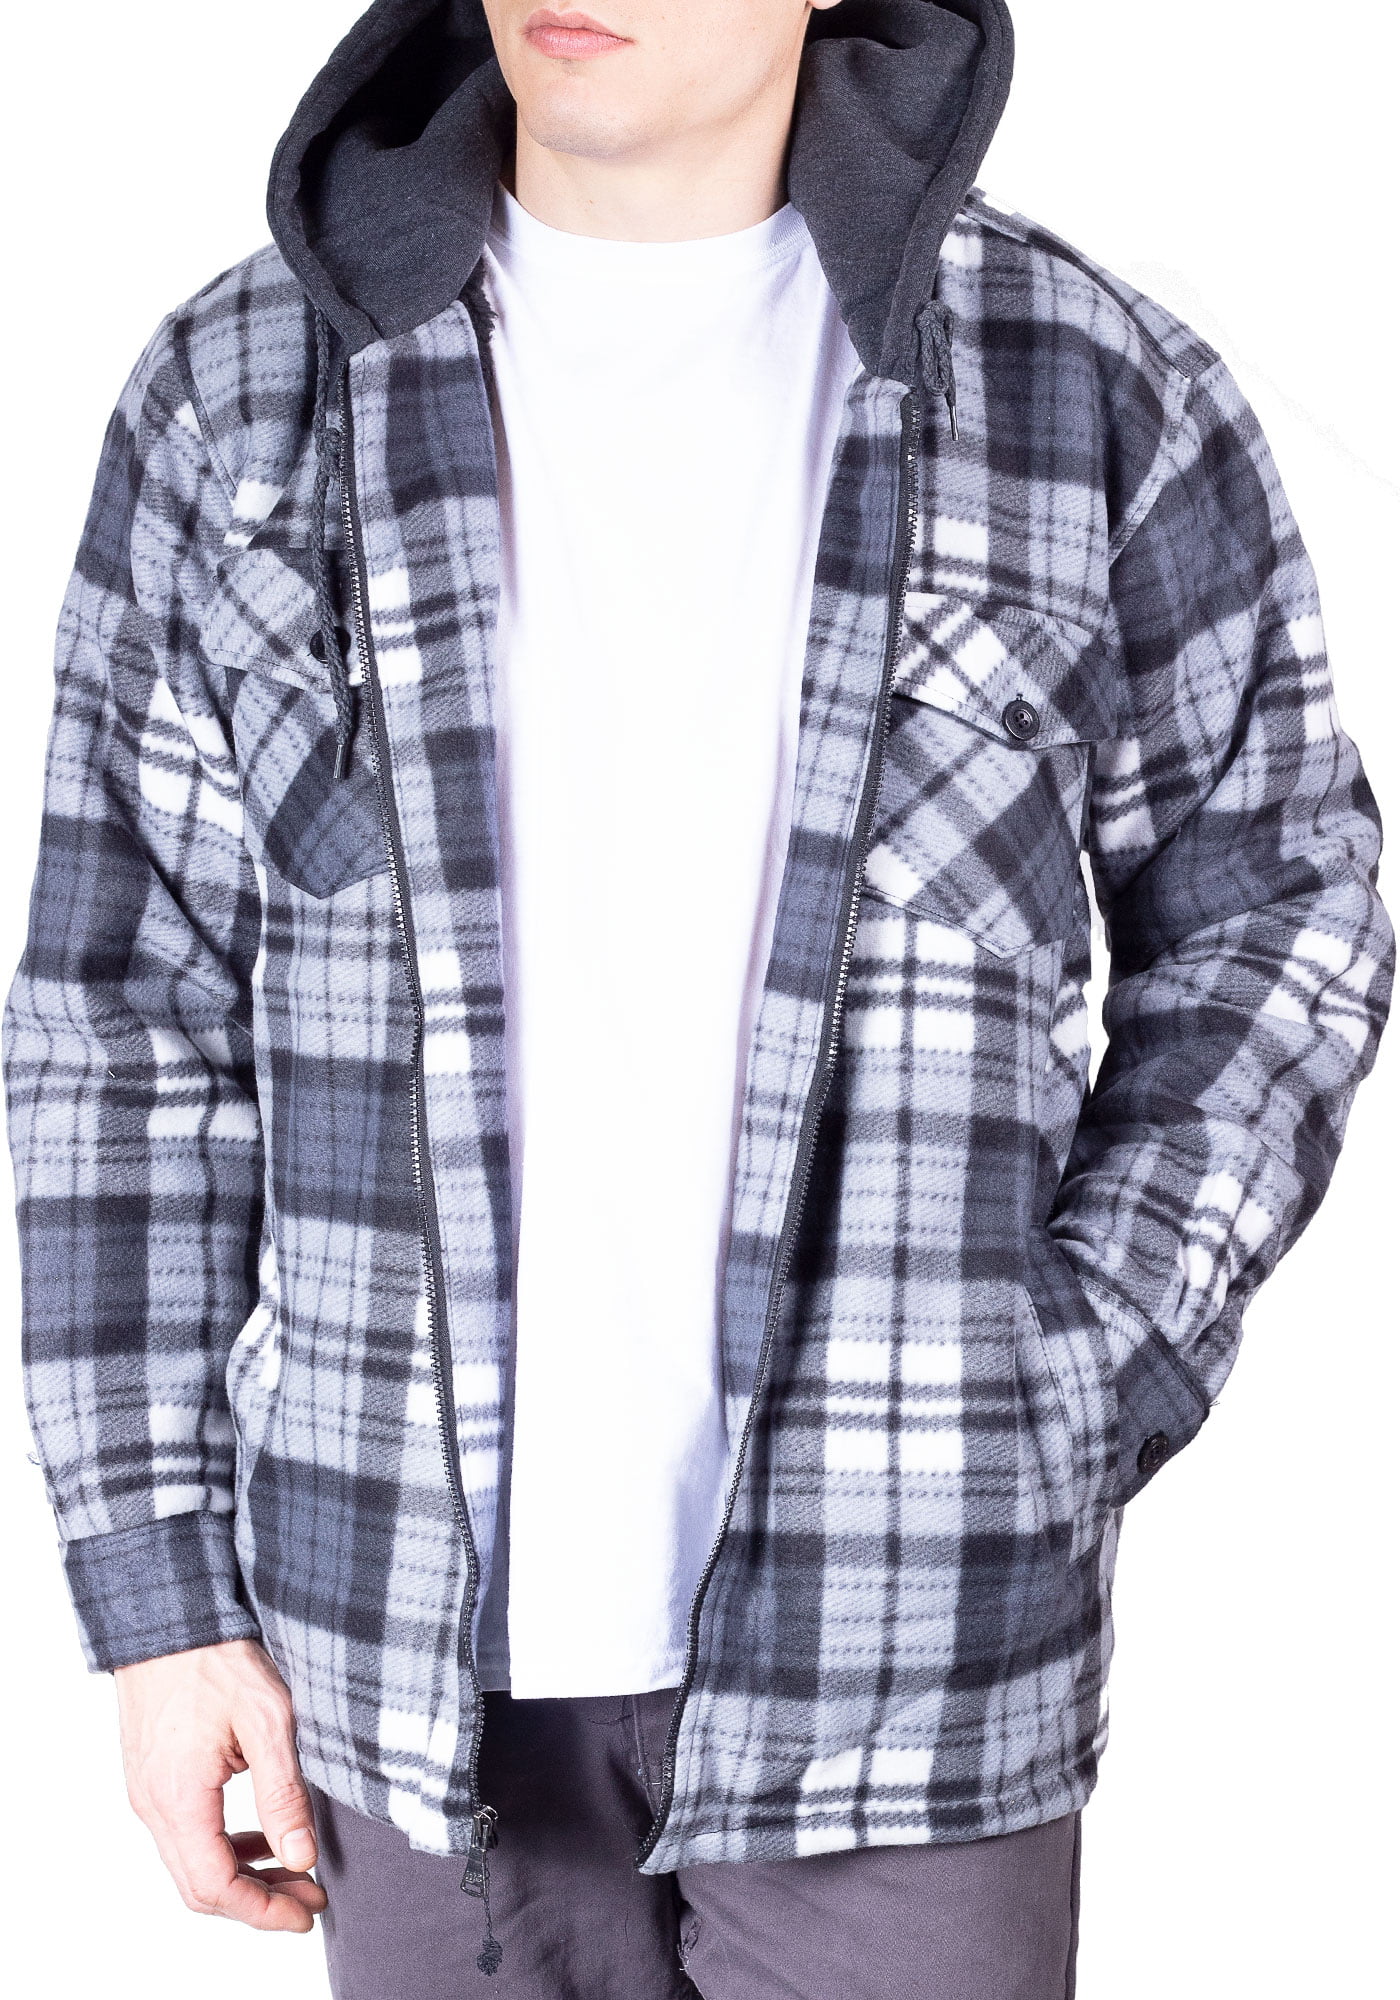 West Louis Mens Warm Cotton Plaid Jacket Fleece Lining Lumberjack Style Plaid Jacket